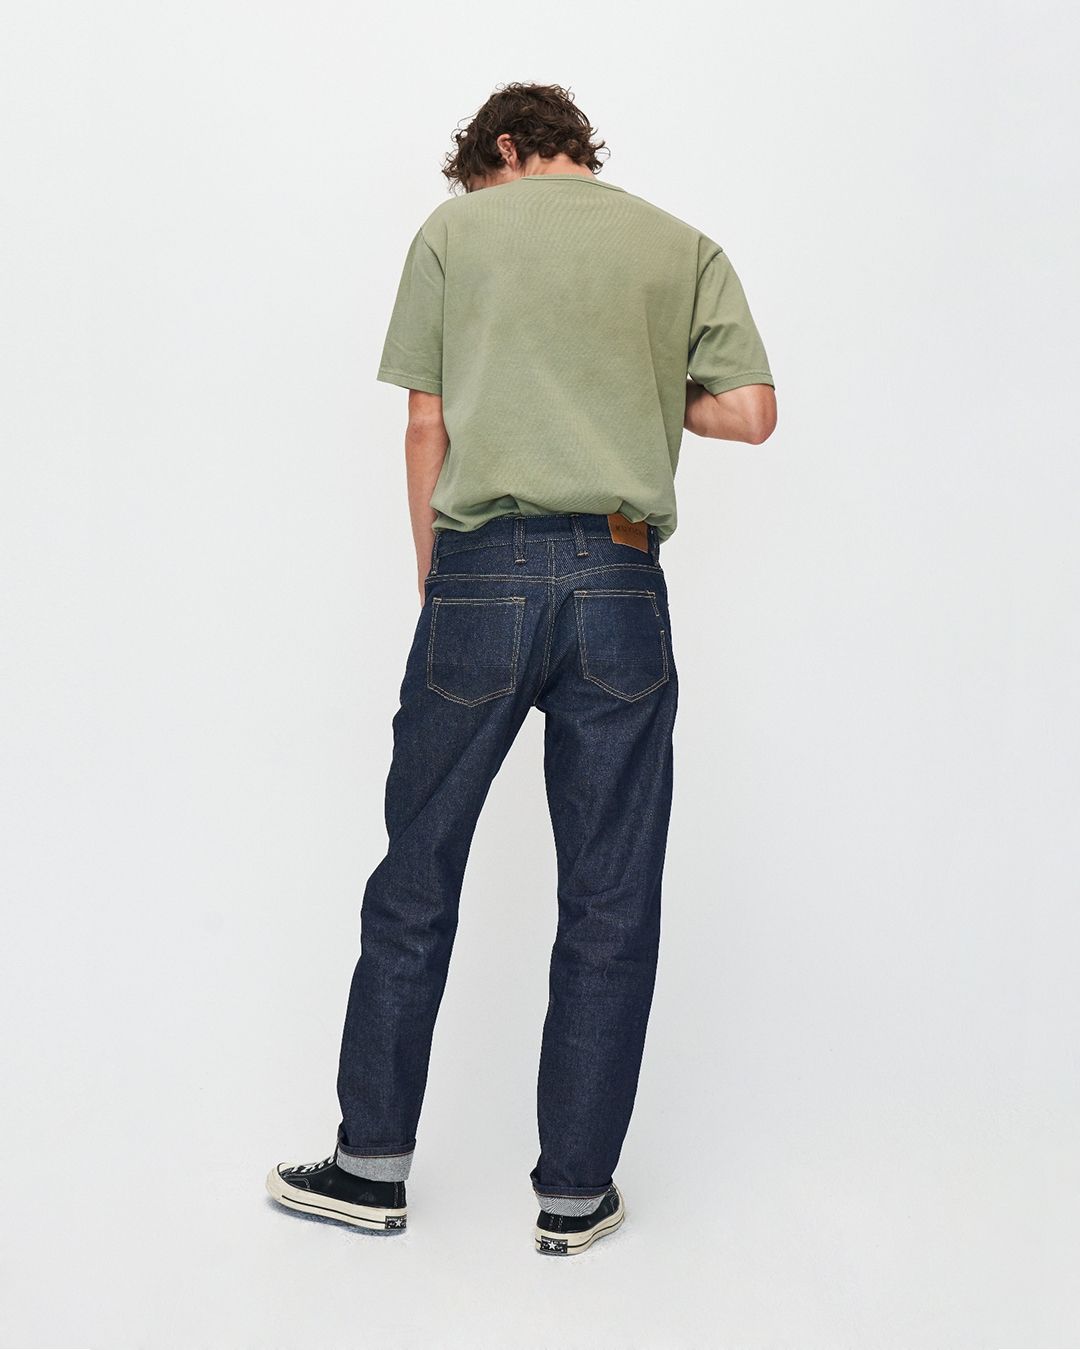 Scott regular fit jeans dry denim selvedge gerecycled